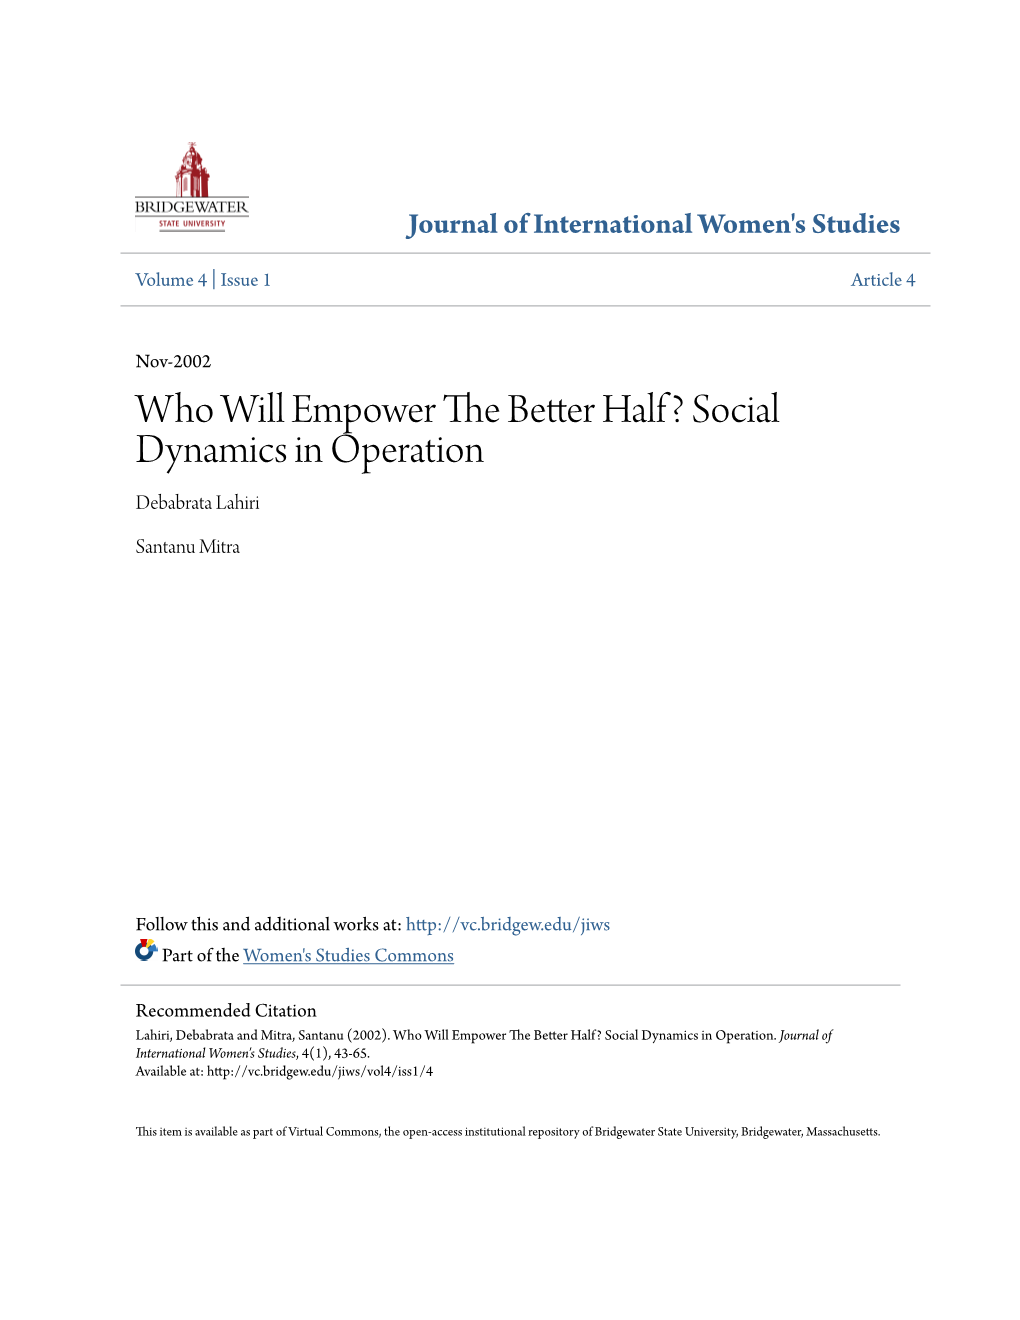 Who Will Empower the Better Half? Social Dynamics in Operation Debabrata Lahiri